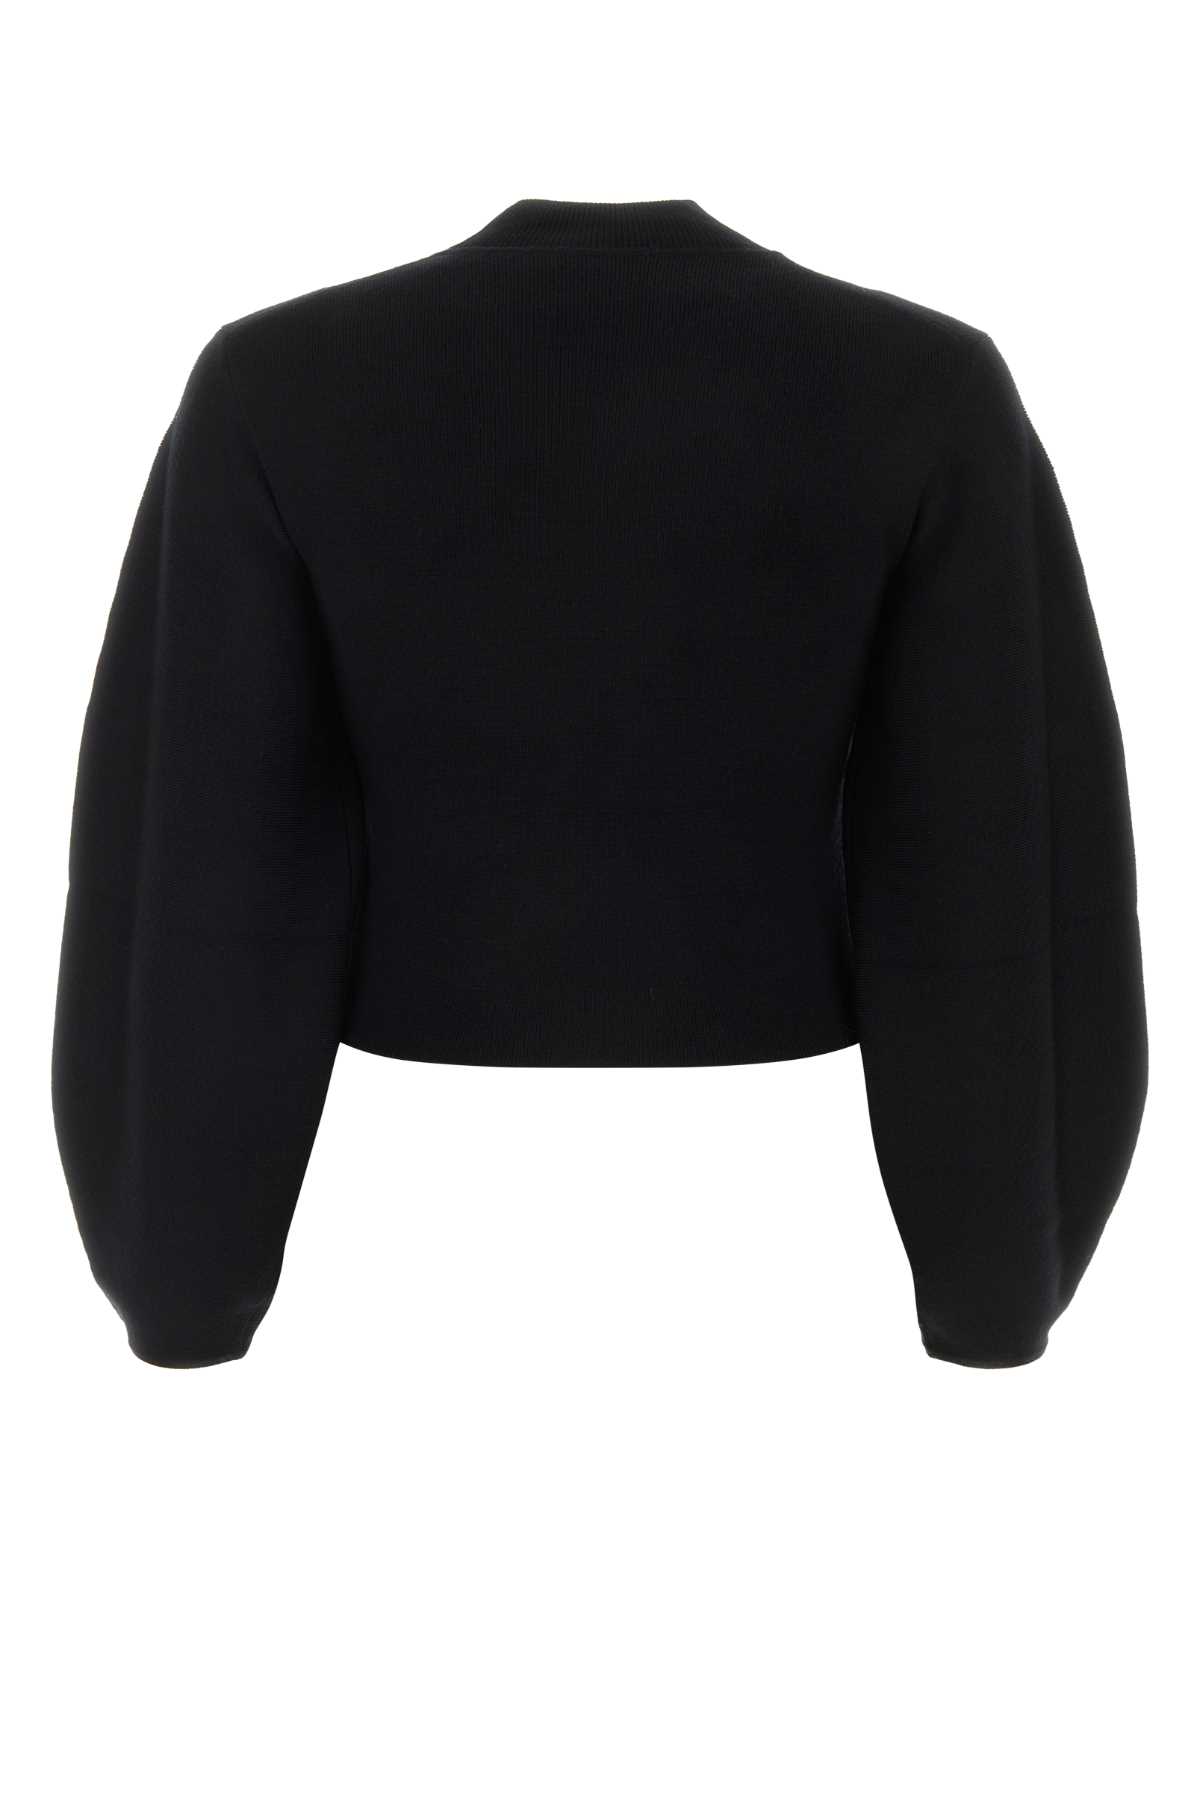 Chloé Black Wool Sweater